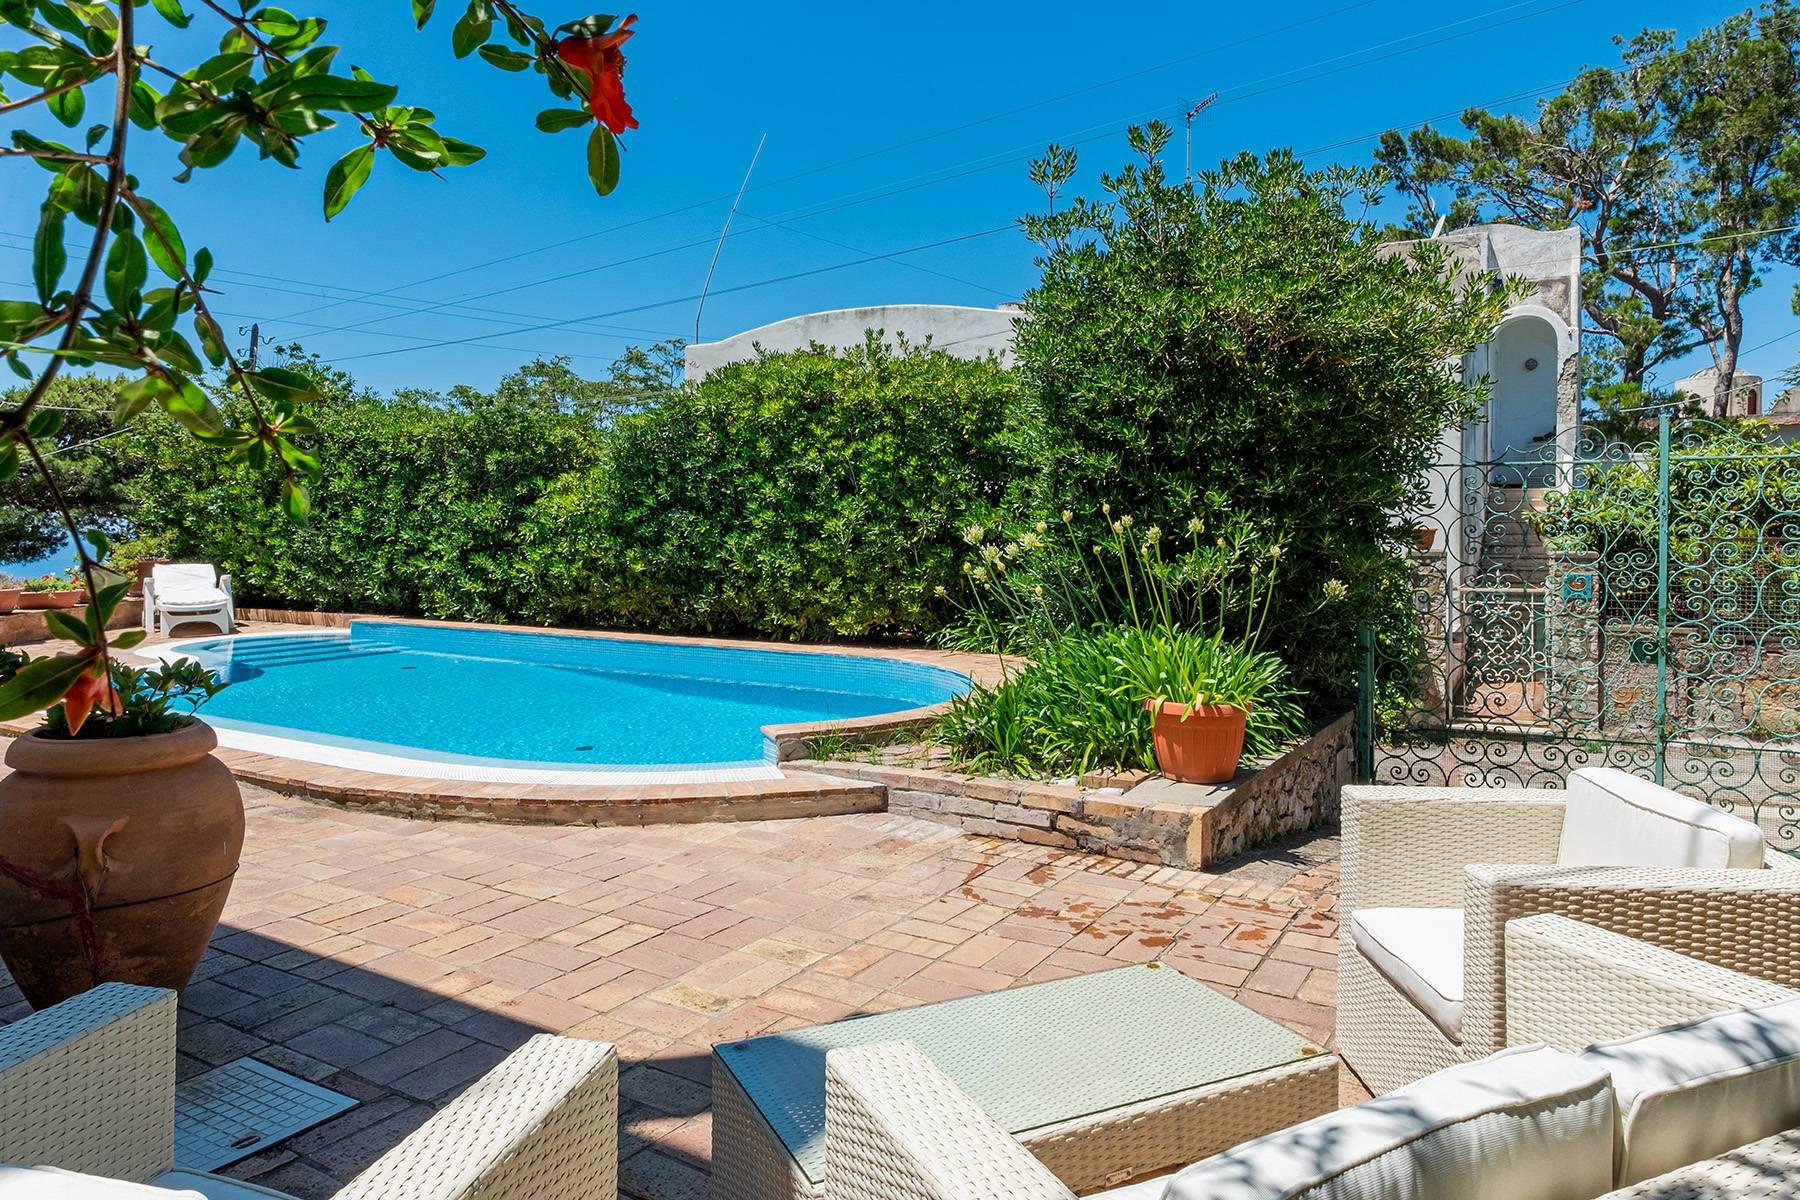 Charming villa with swimming pool in Anacapri - 3